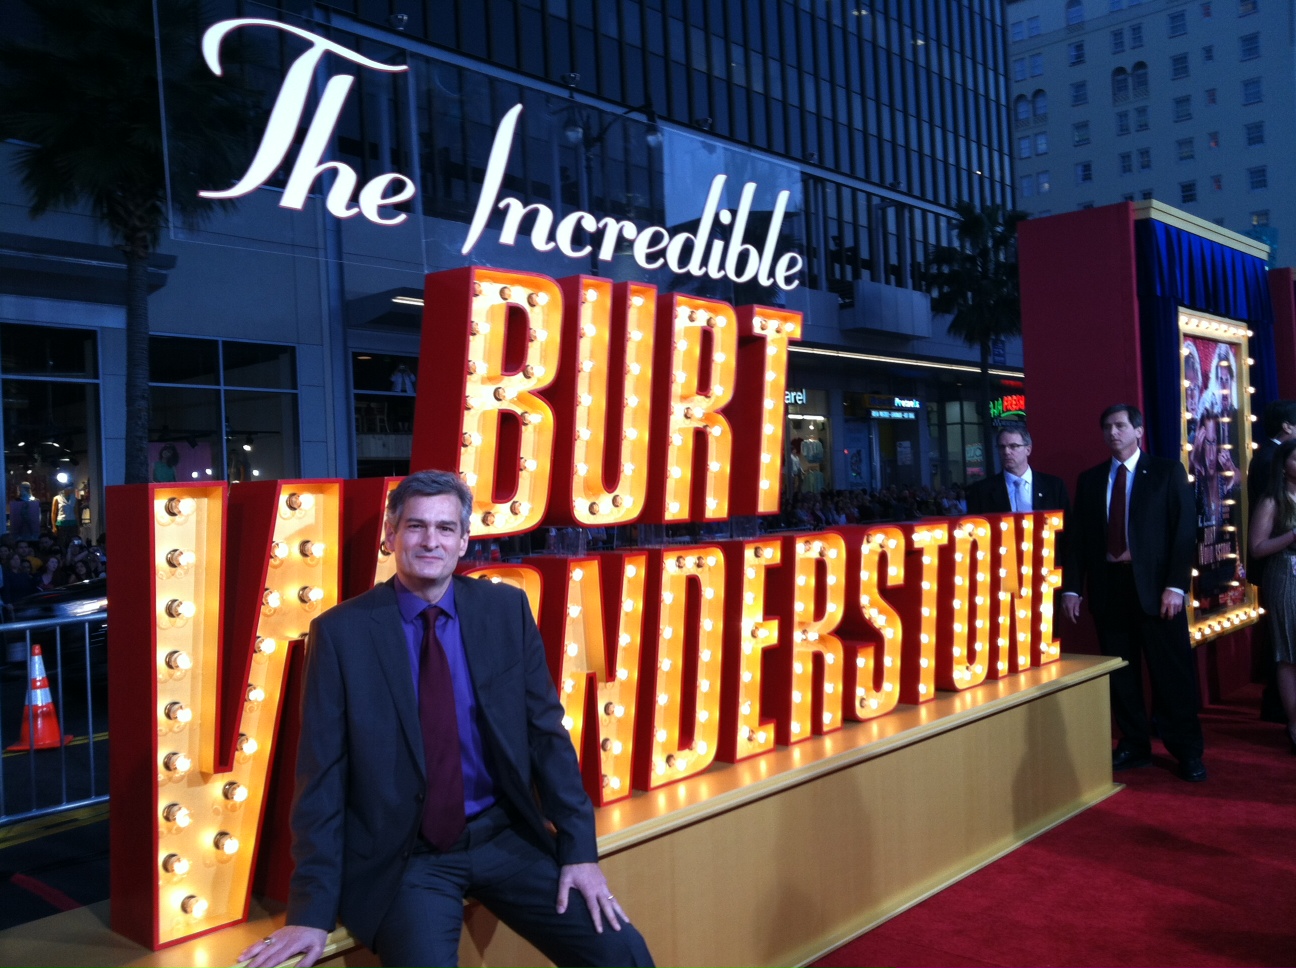 The Incredible Burt Wonderstone Premier 3/11/13